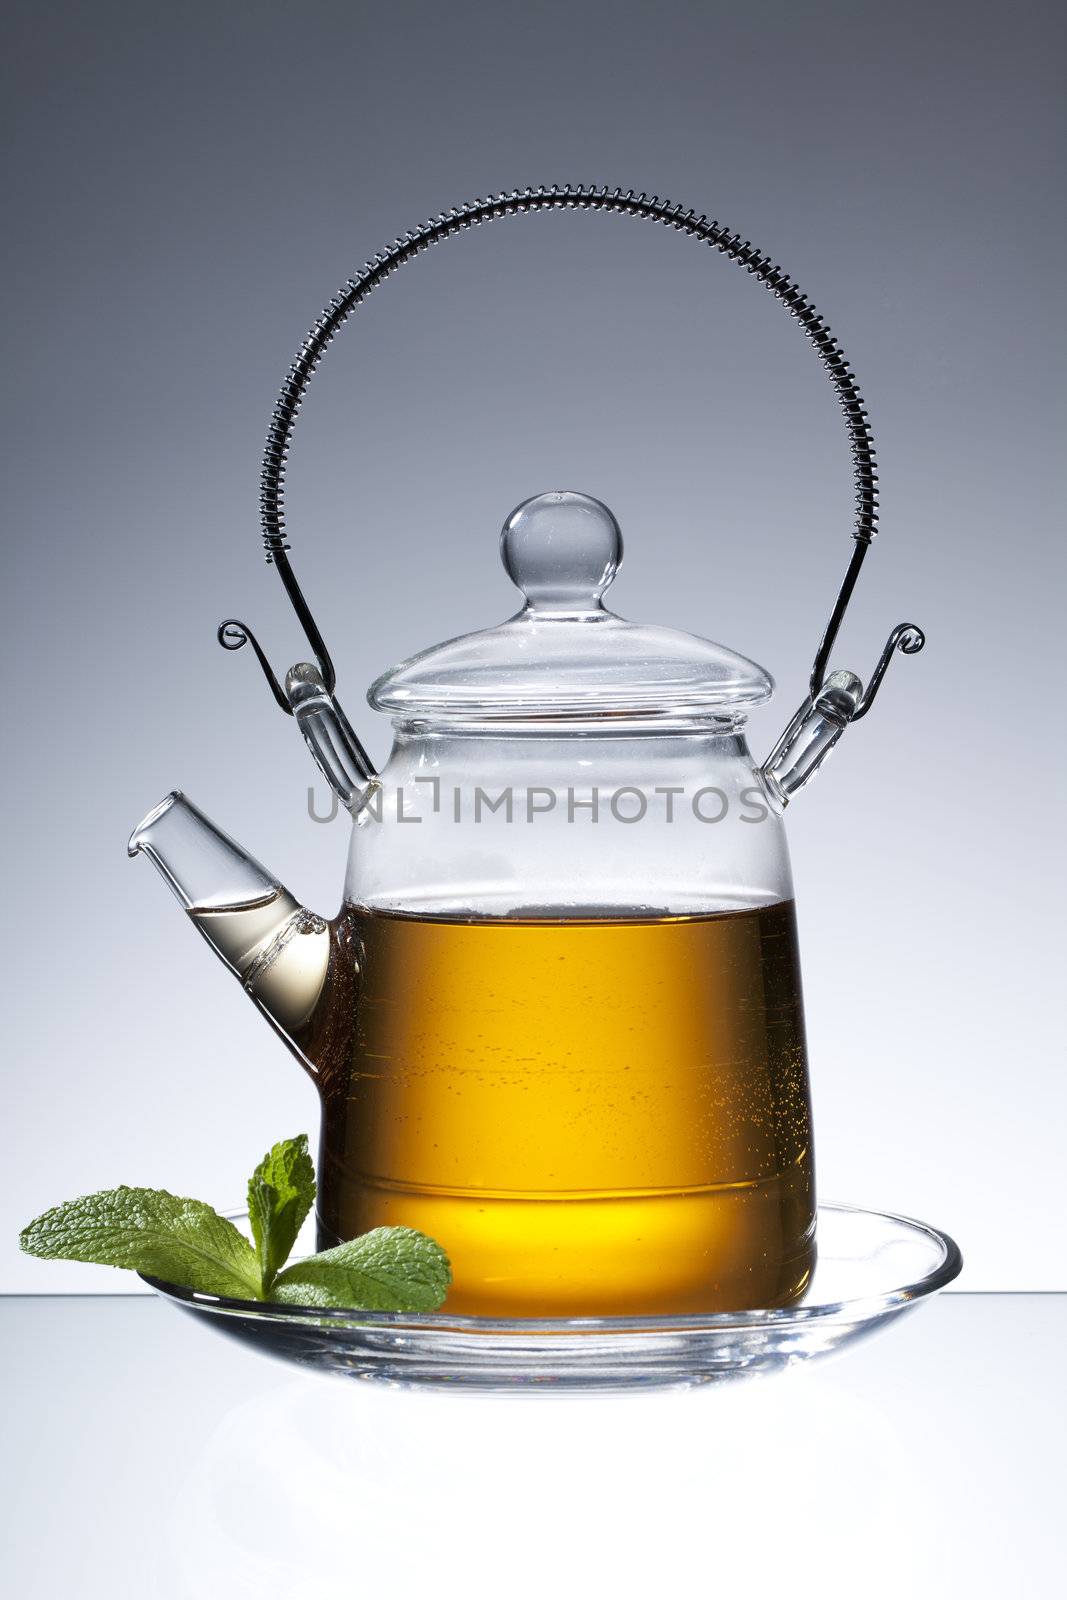 tea pitcher on a saucer with mint leaf